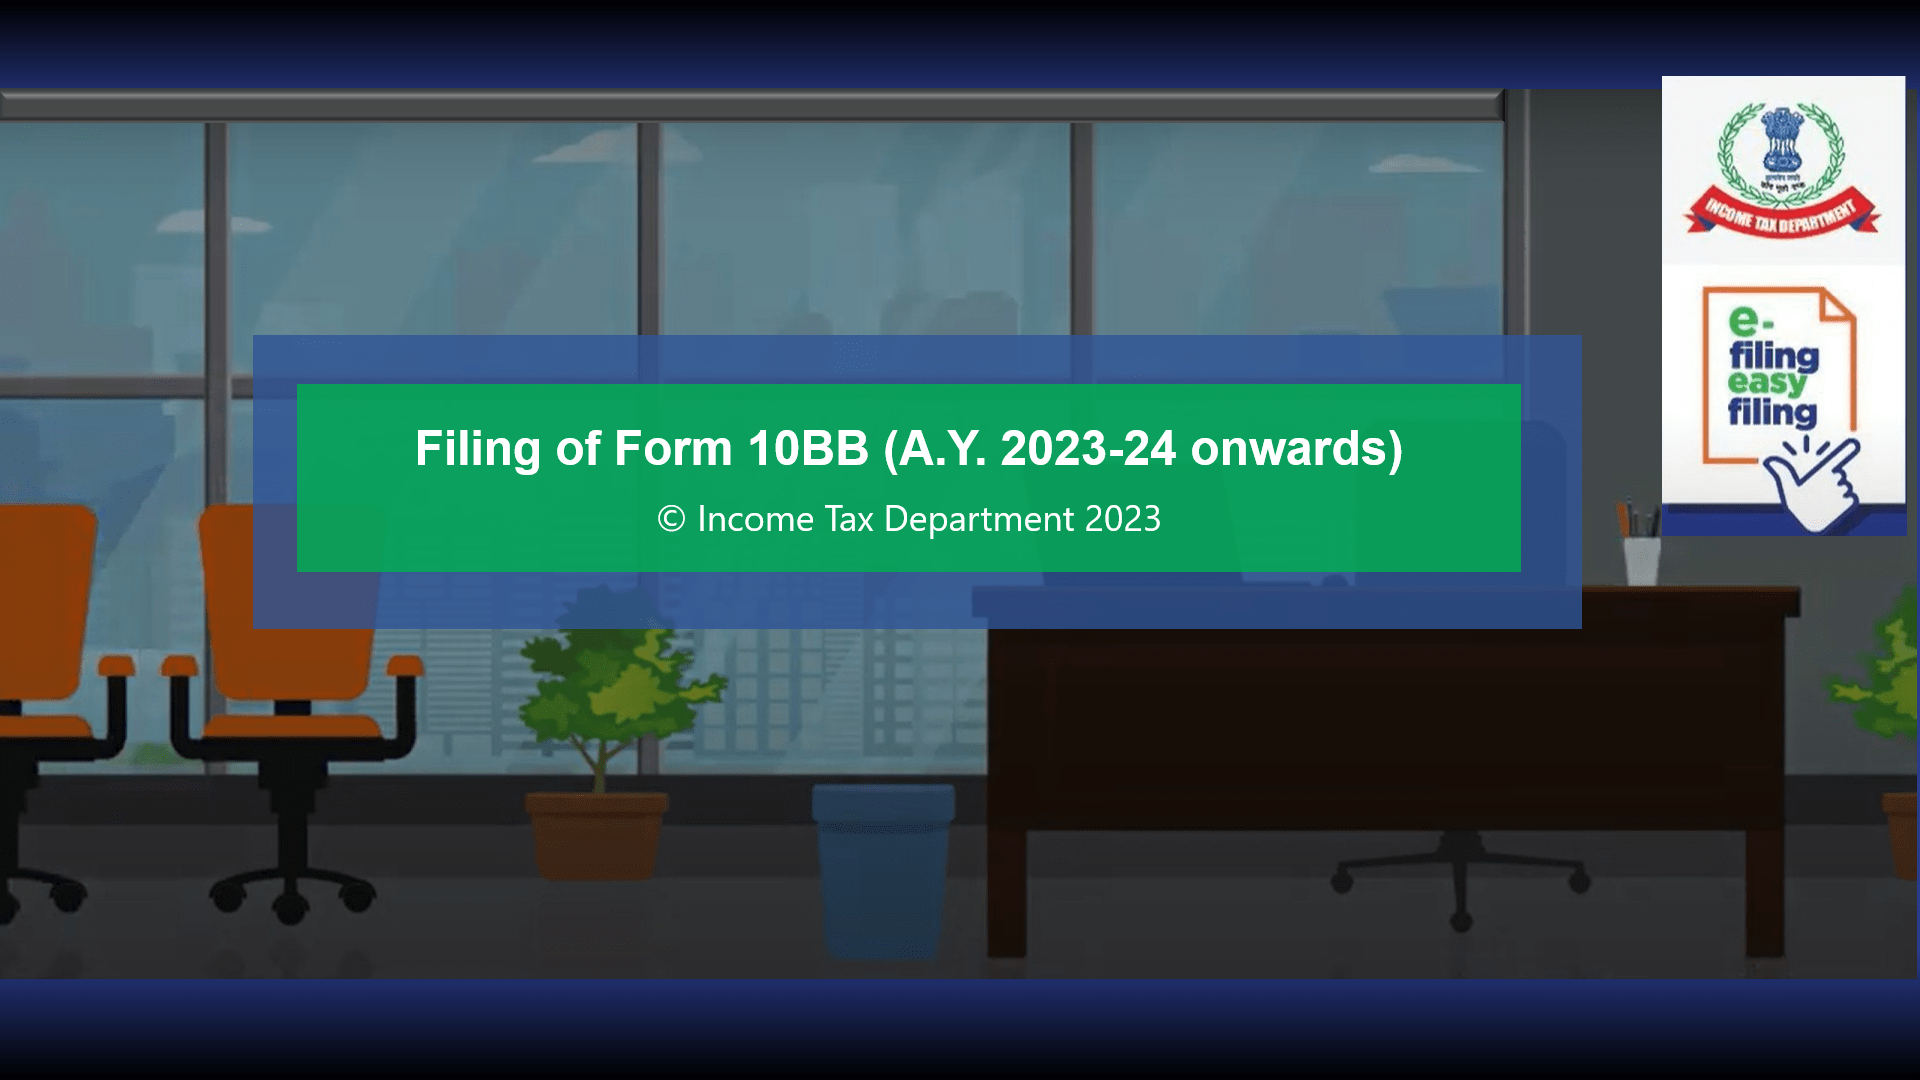 Form 10BB